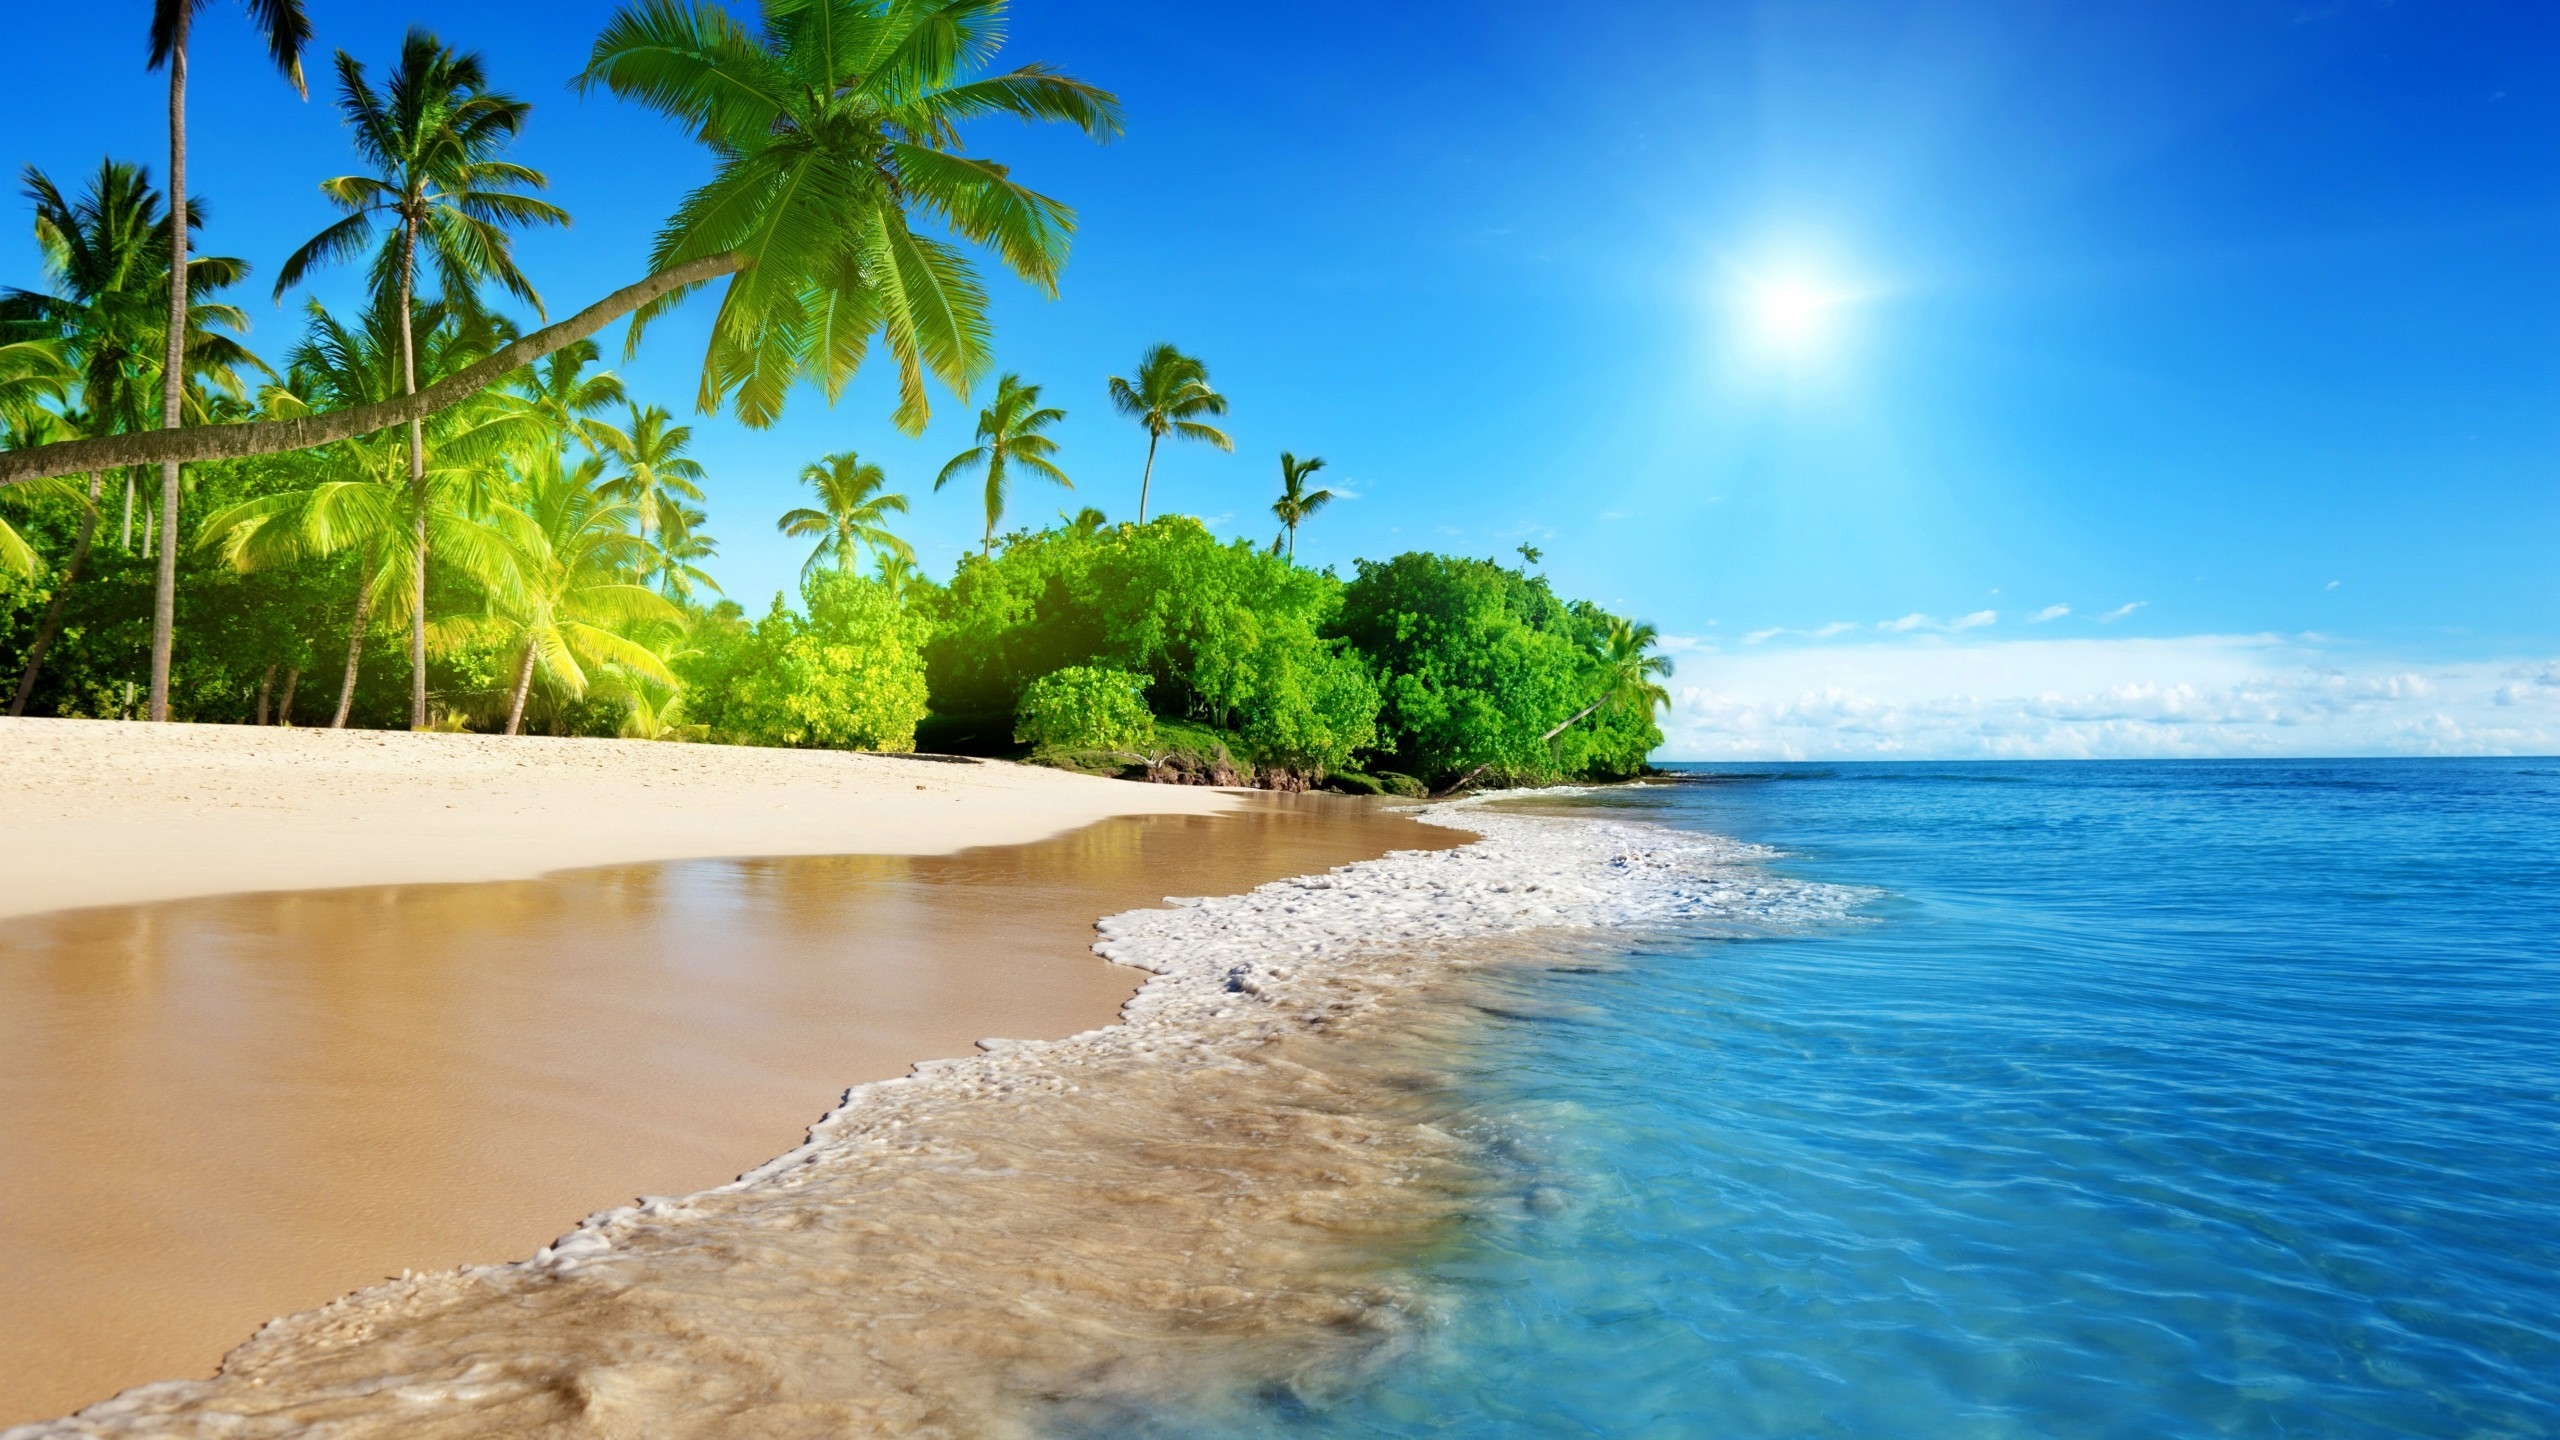 Tropical Beach Corner for 2560x1440 HDTV resolution